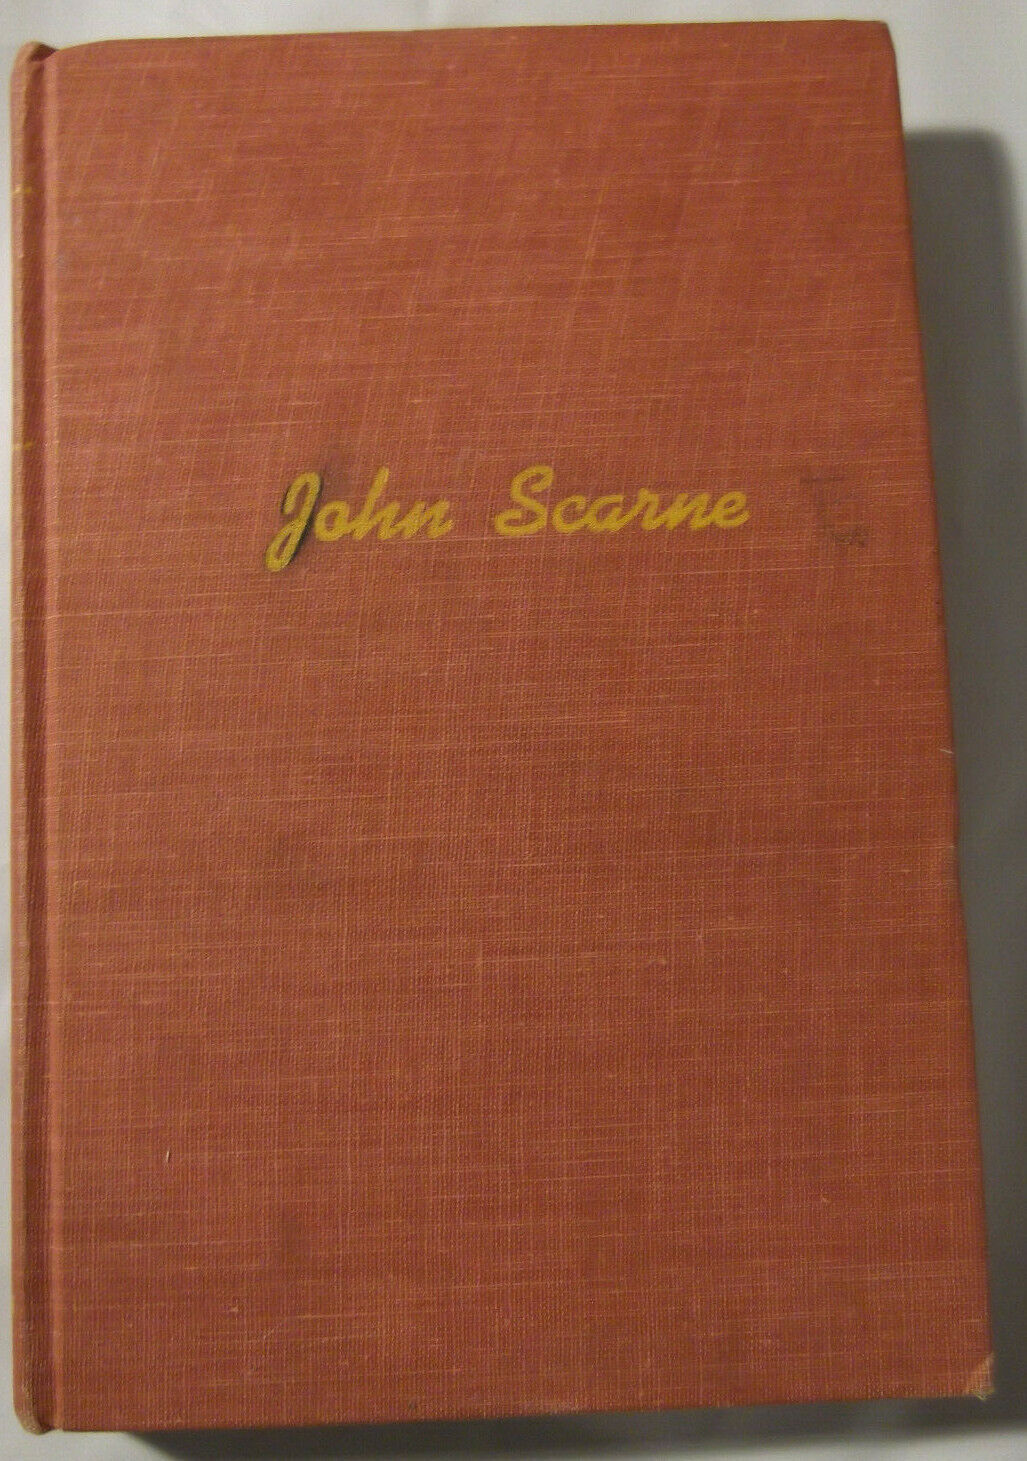 Scarne's Magic Tricks John Scarne Vintage Hardcover. 1965 sixth printing